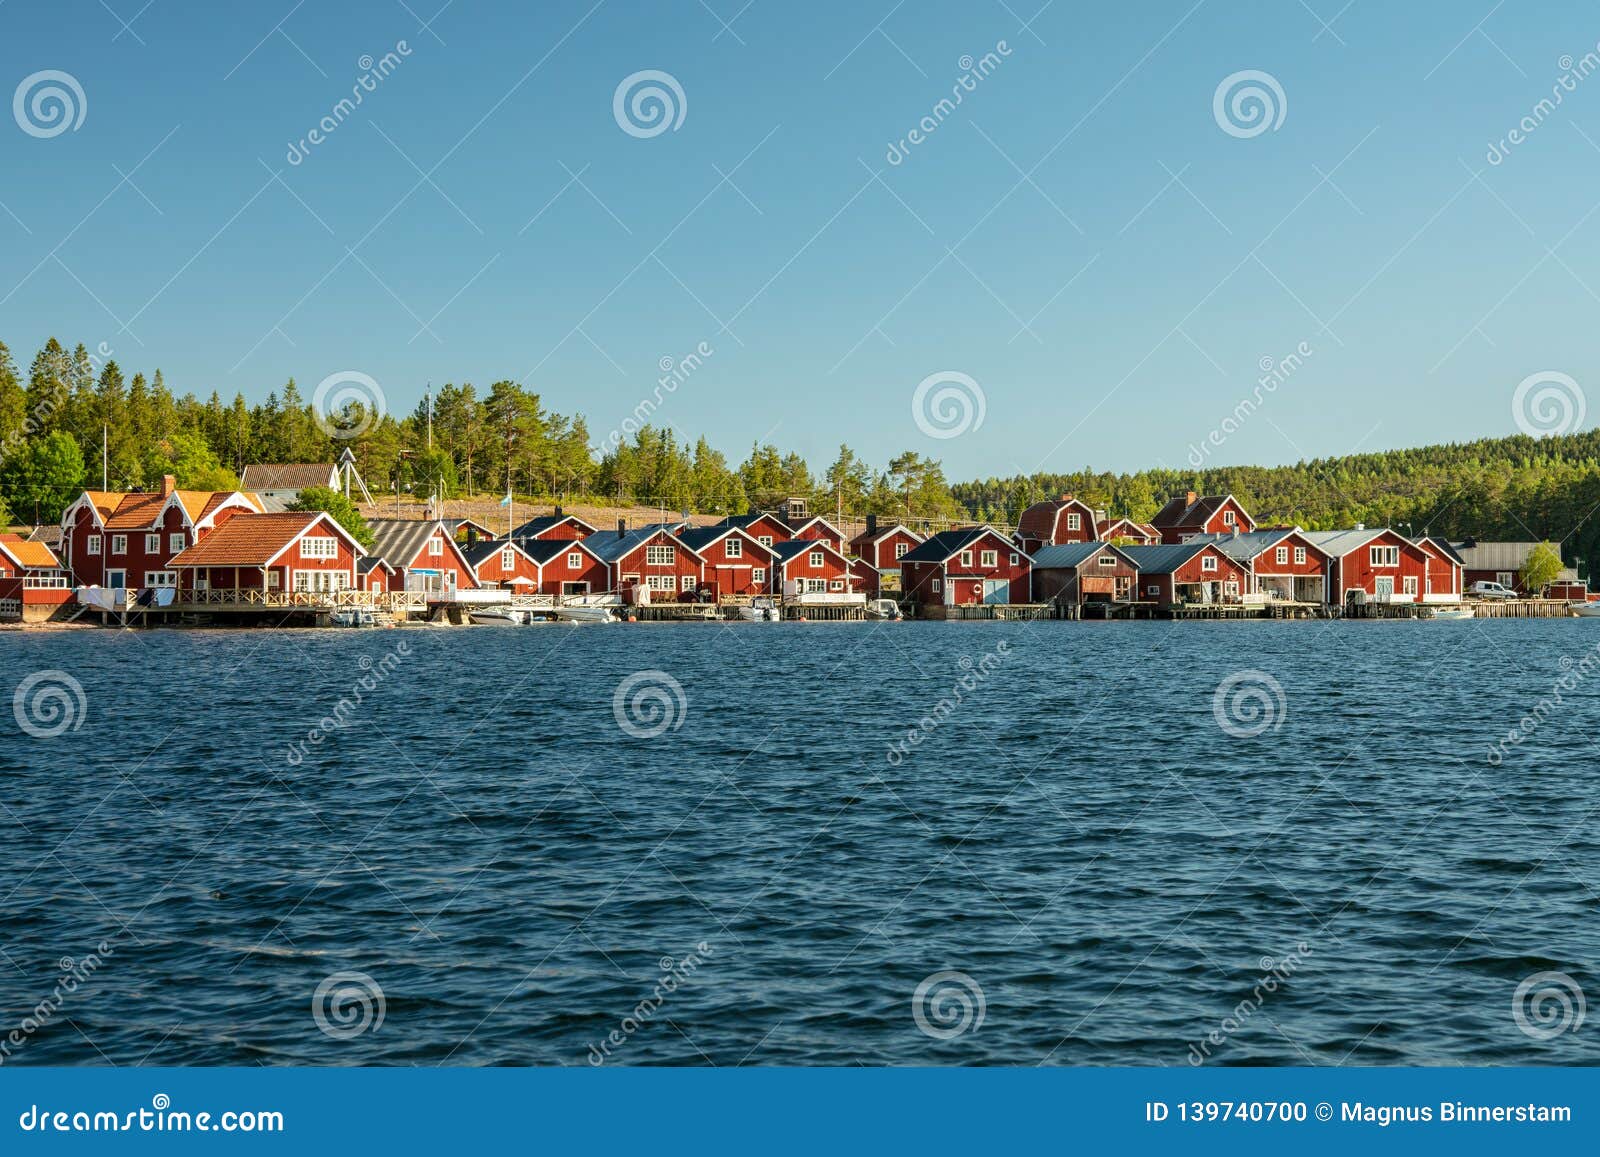 scaring med uret nedbryder Summer View of a Fishing Camp in Sweden Stock Photo - Image of rural,  north: 139740700